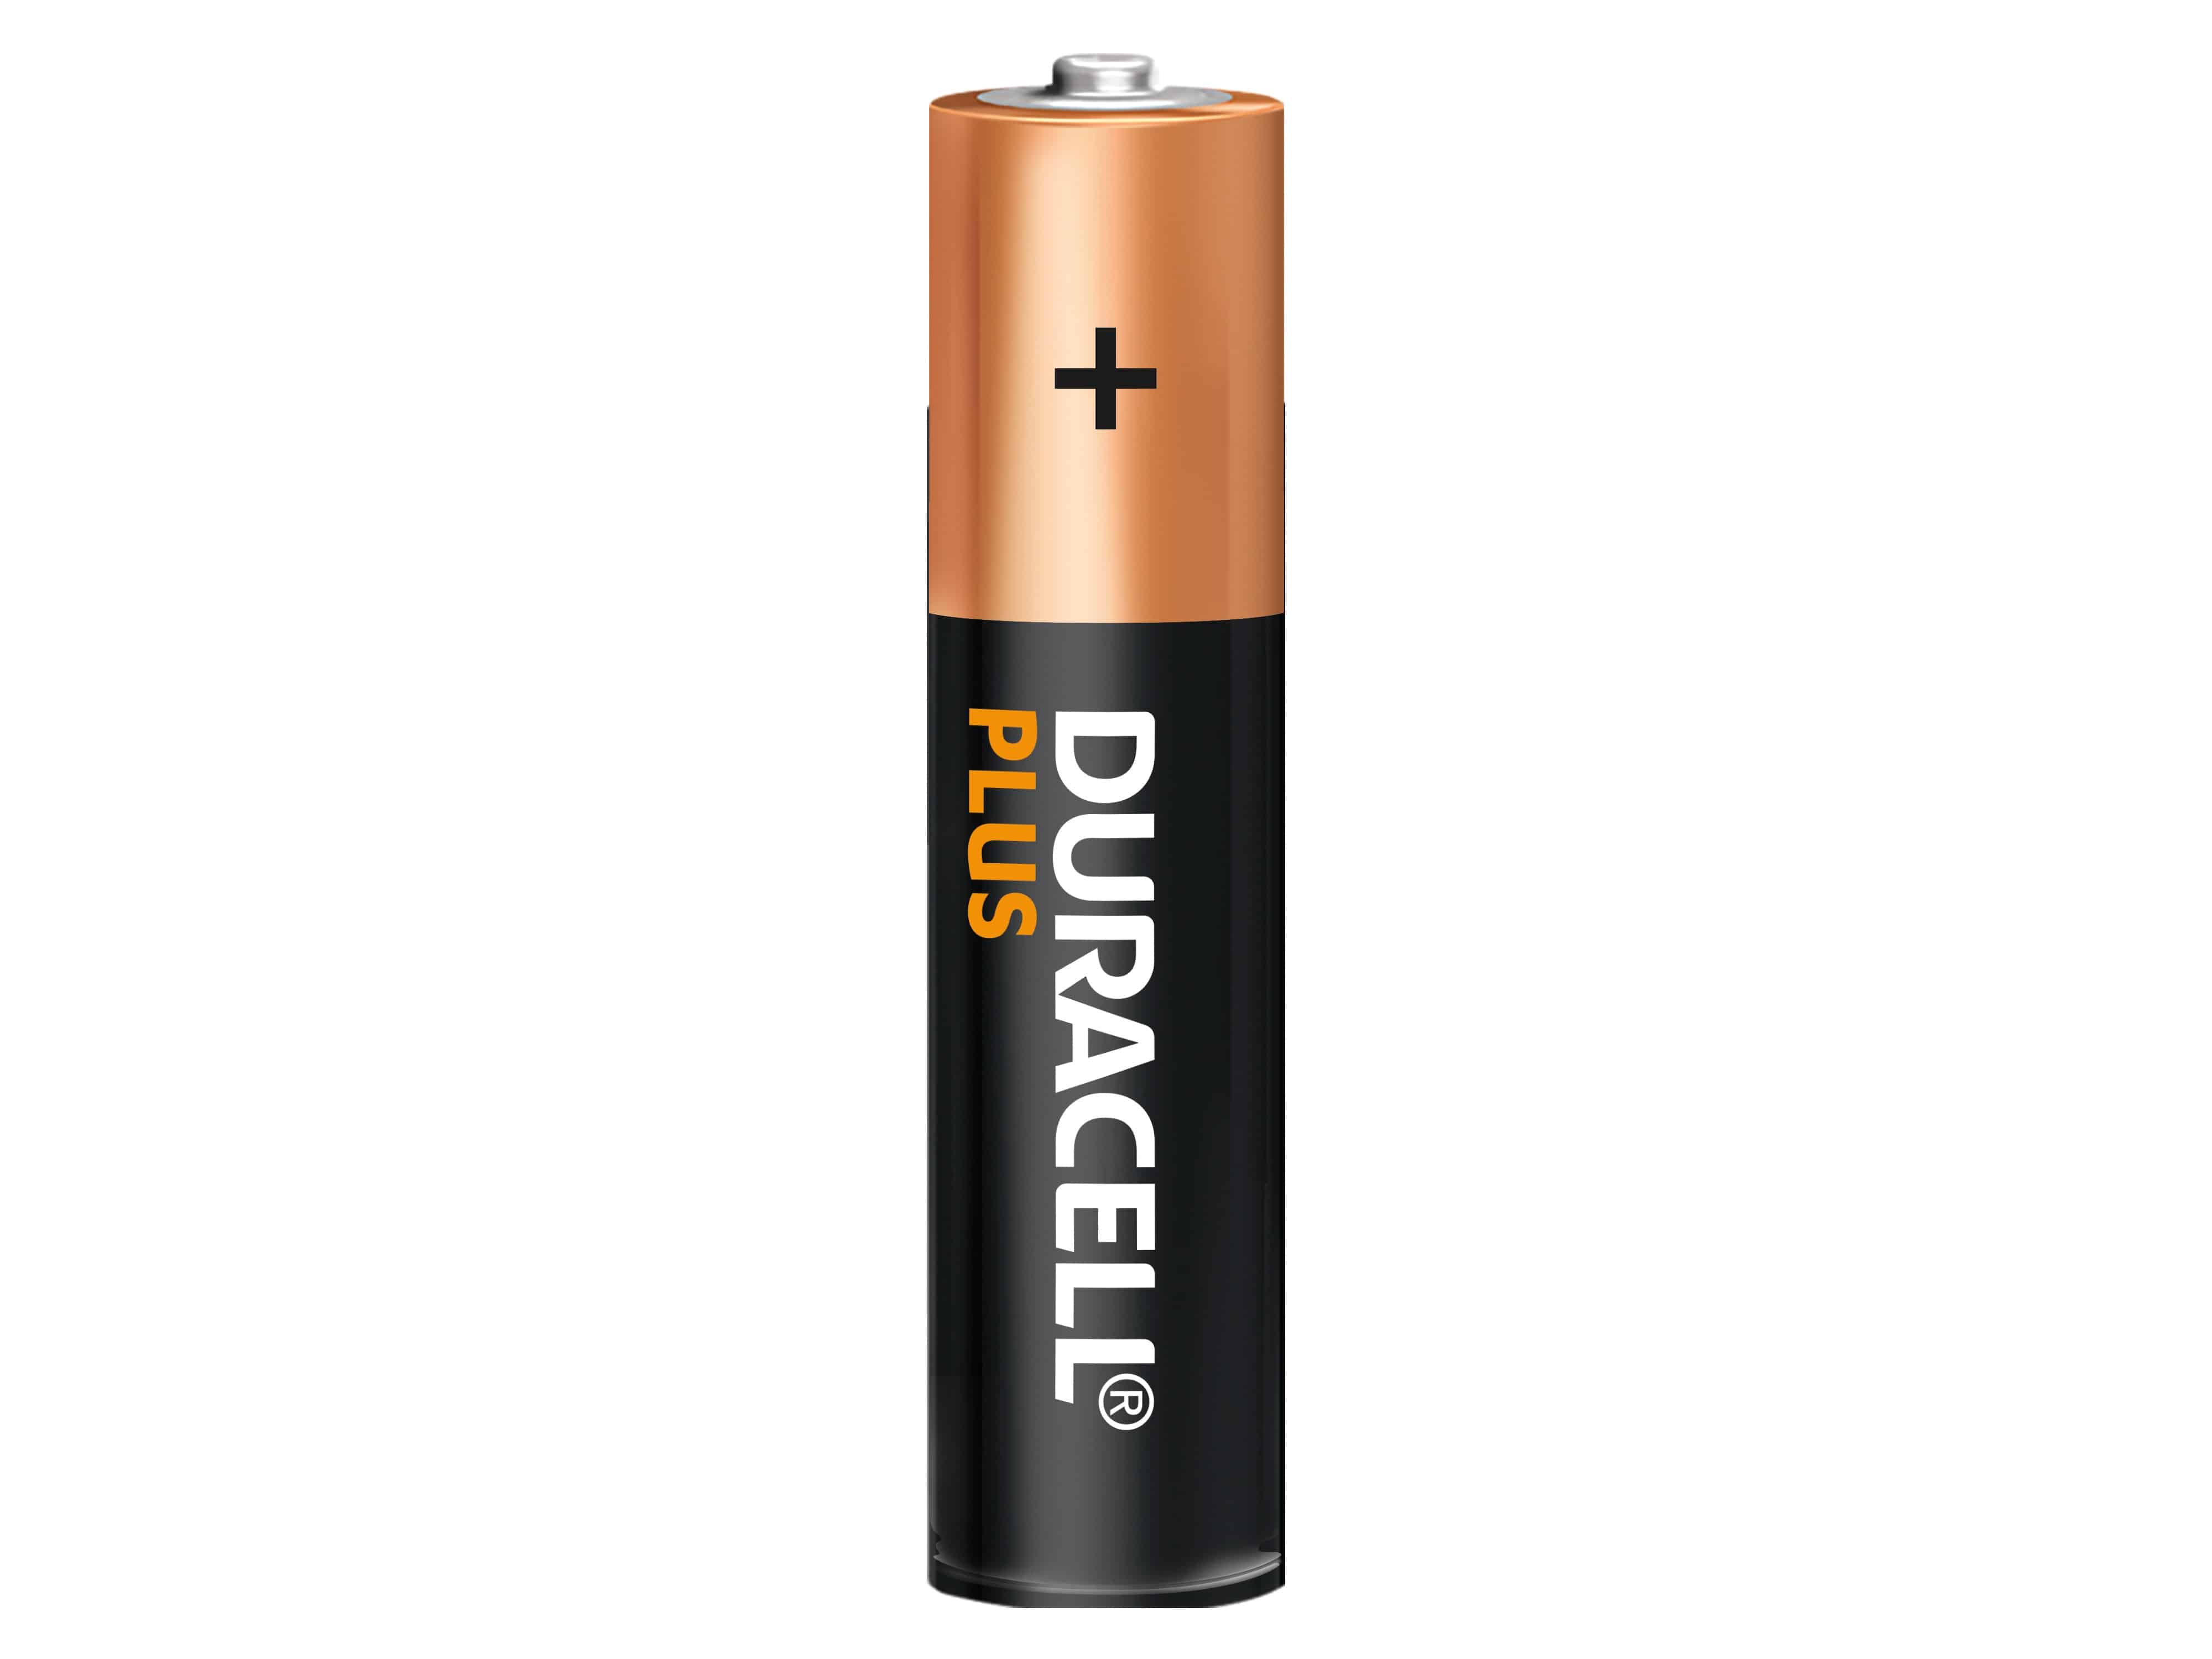 DURACELL Batterie Alkaline, Micro, AAA, LR03, 1,5V, Plus, Extra Life, 10 Stück